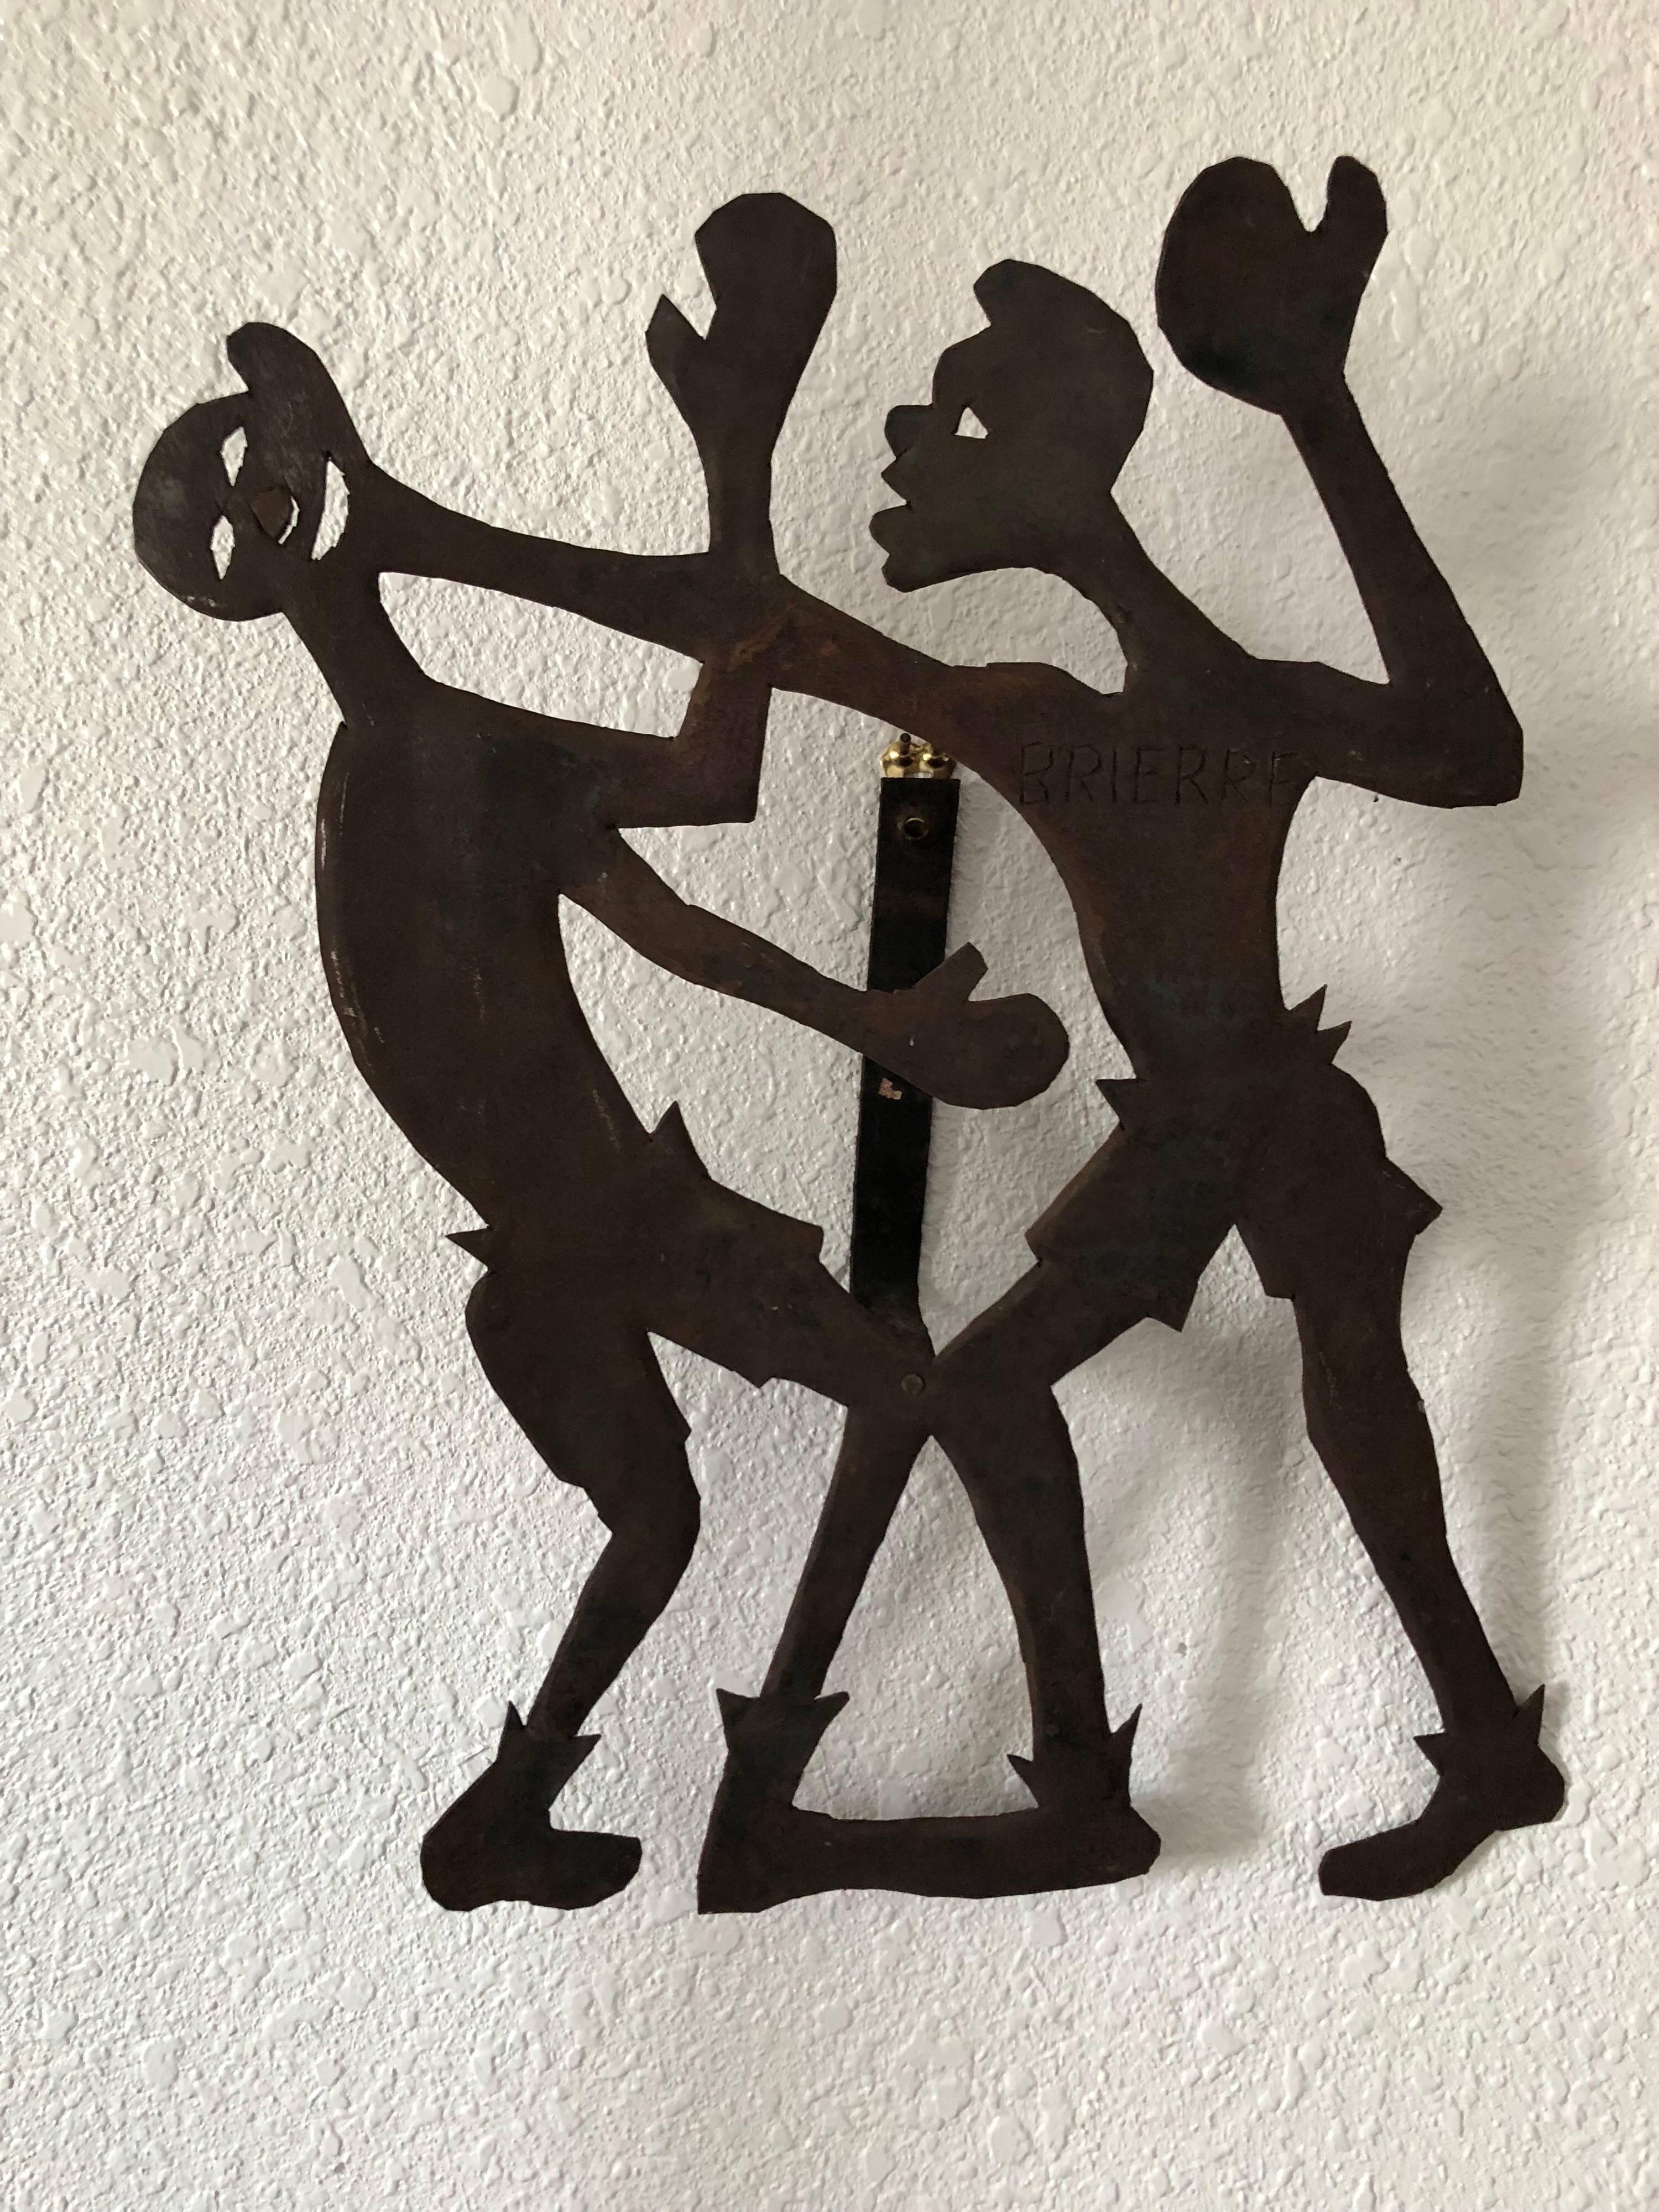 Haitian Folk Art 'Boxers' Sporting Scene Outsider Art Metal Work Sculpture 2